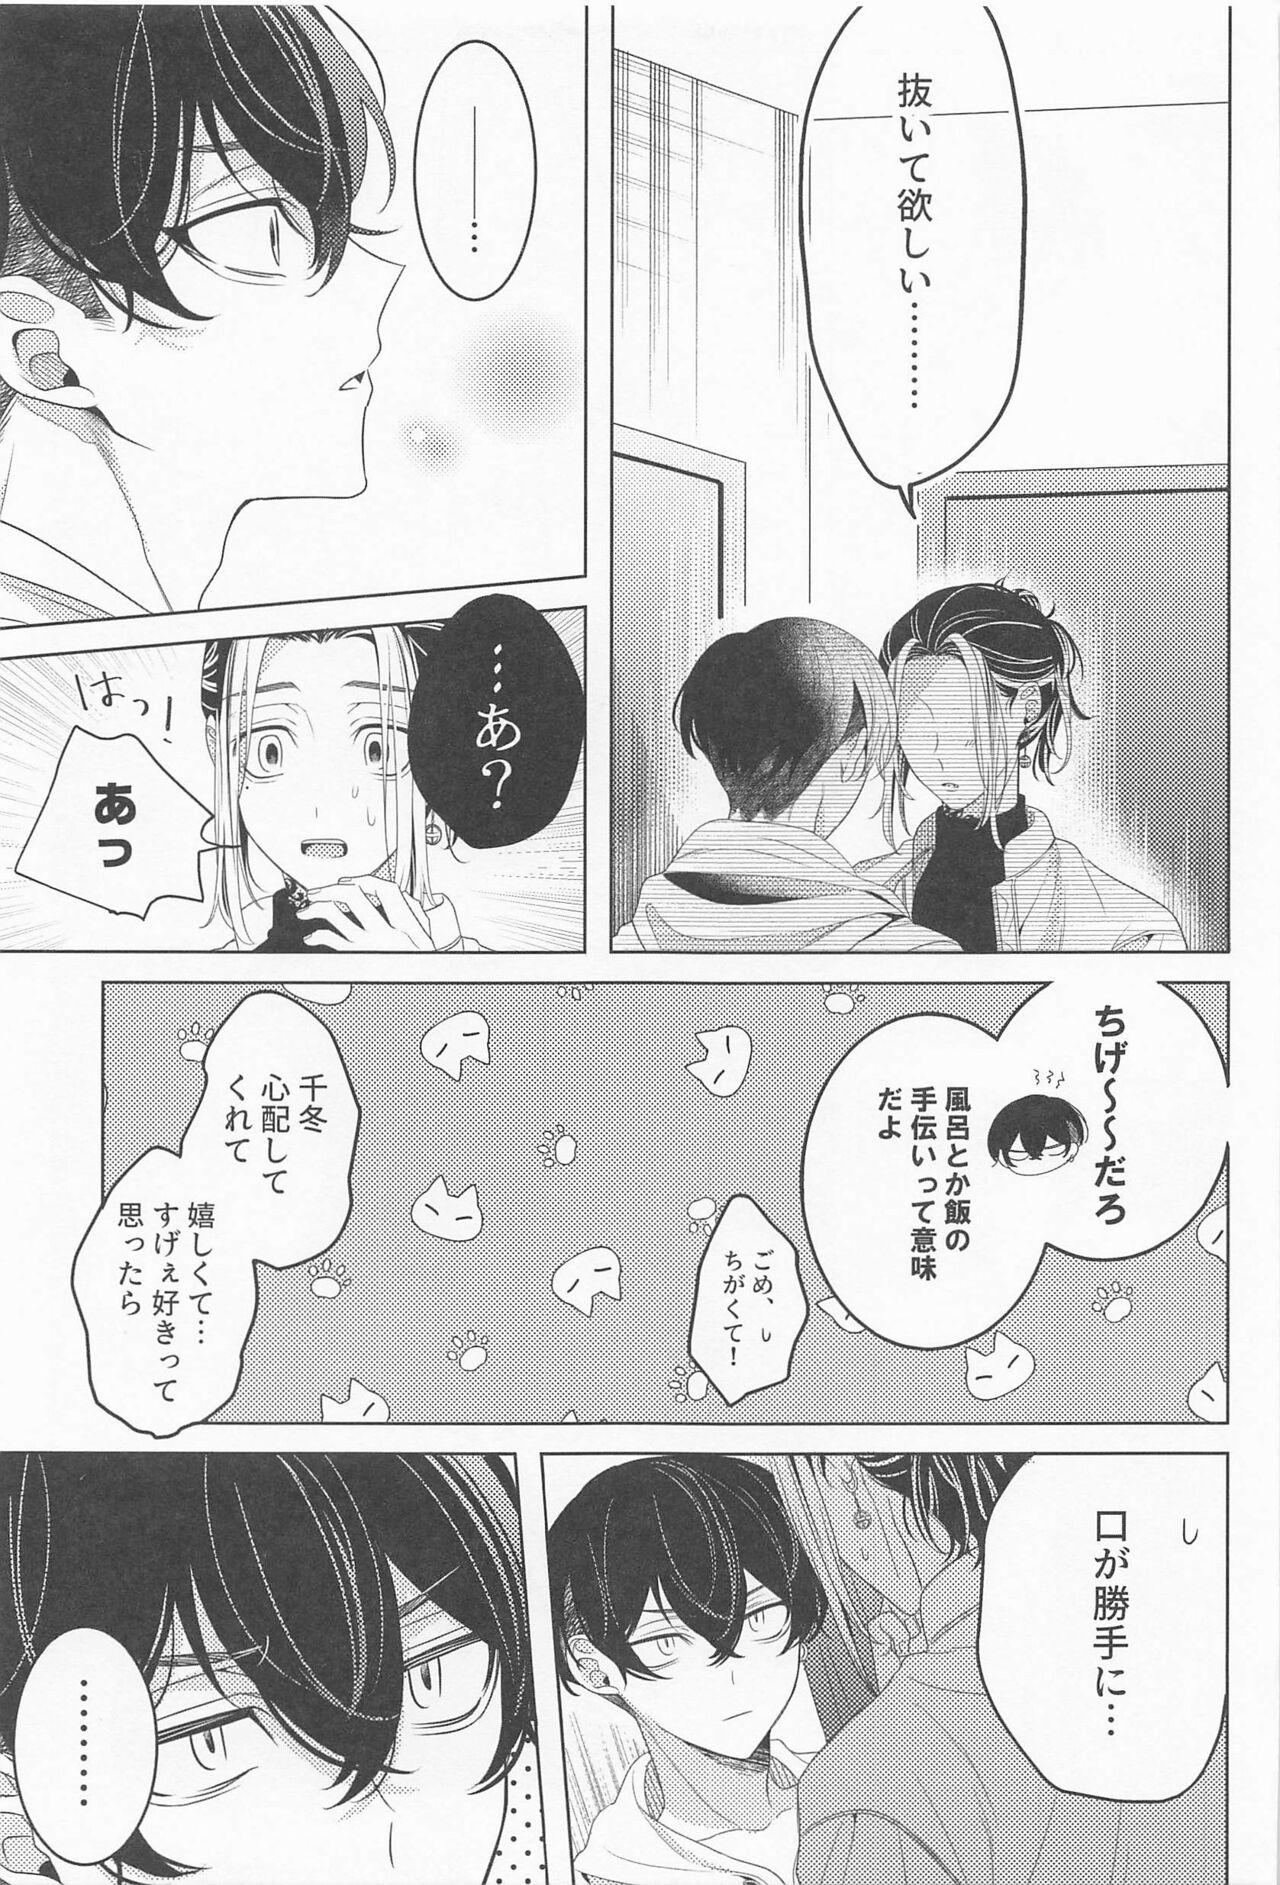 Her sukidakarashimpaishite - Tokyo revengers Highschool - Page 10